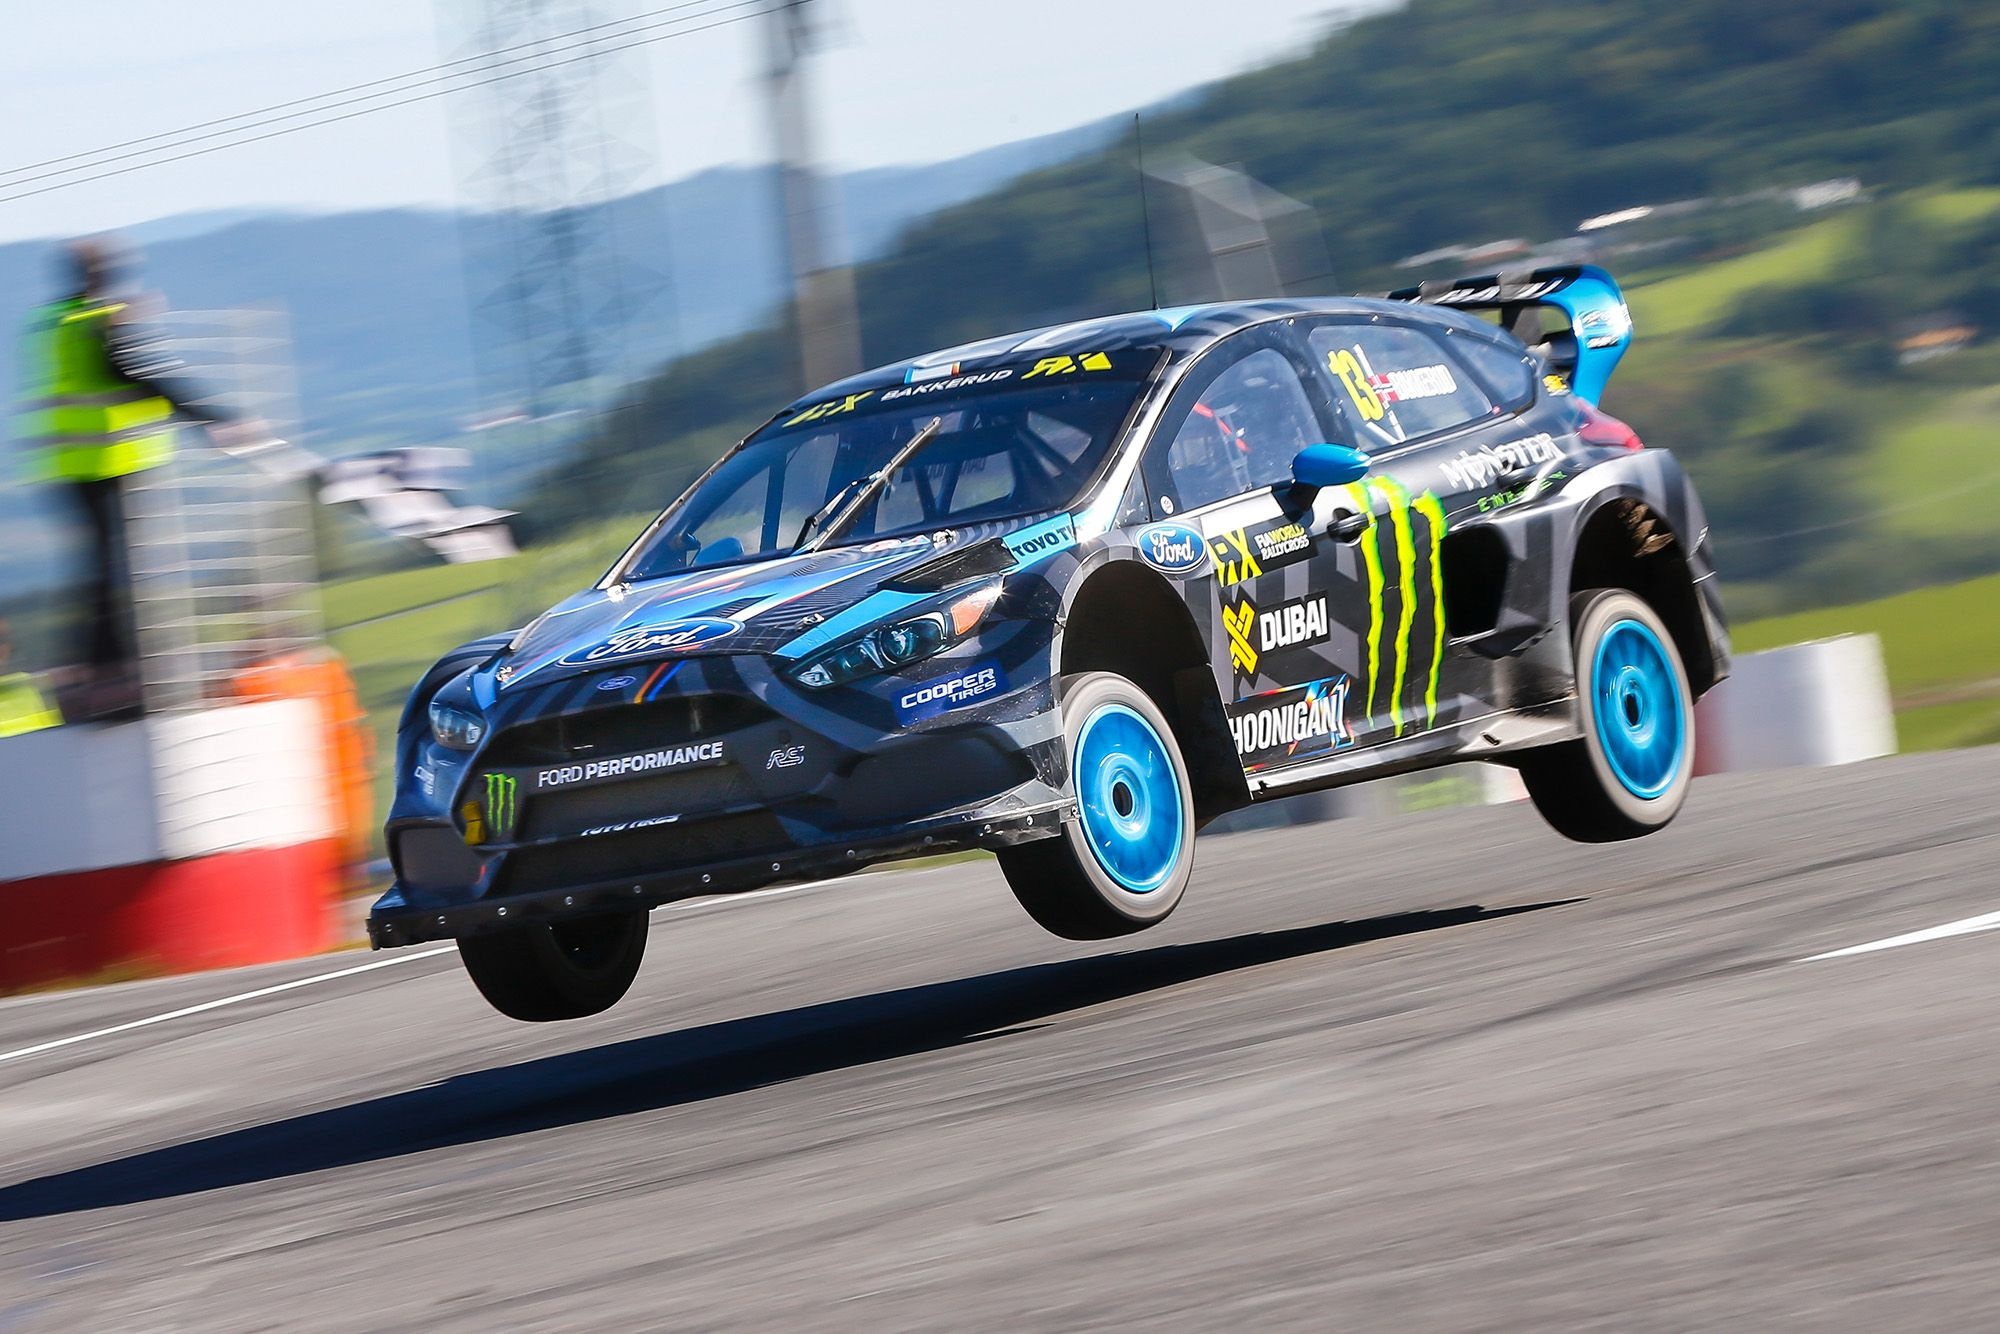 Rallycross: Ford Focus RS RX, Jump on a High Speed, Dubai, Mixed-surface racing circuit. 2000x1340 HD Wallpaper.